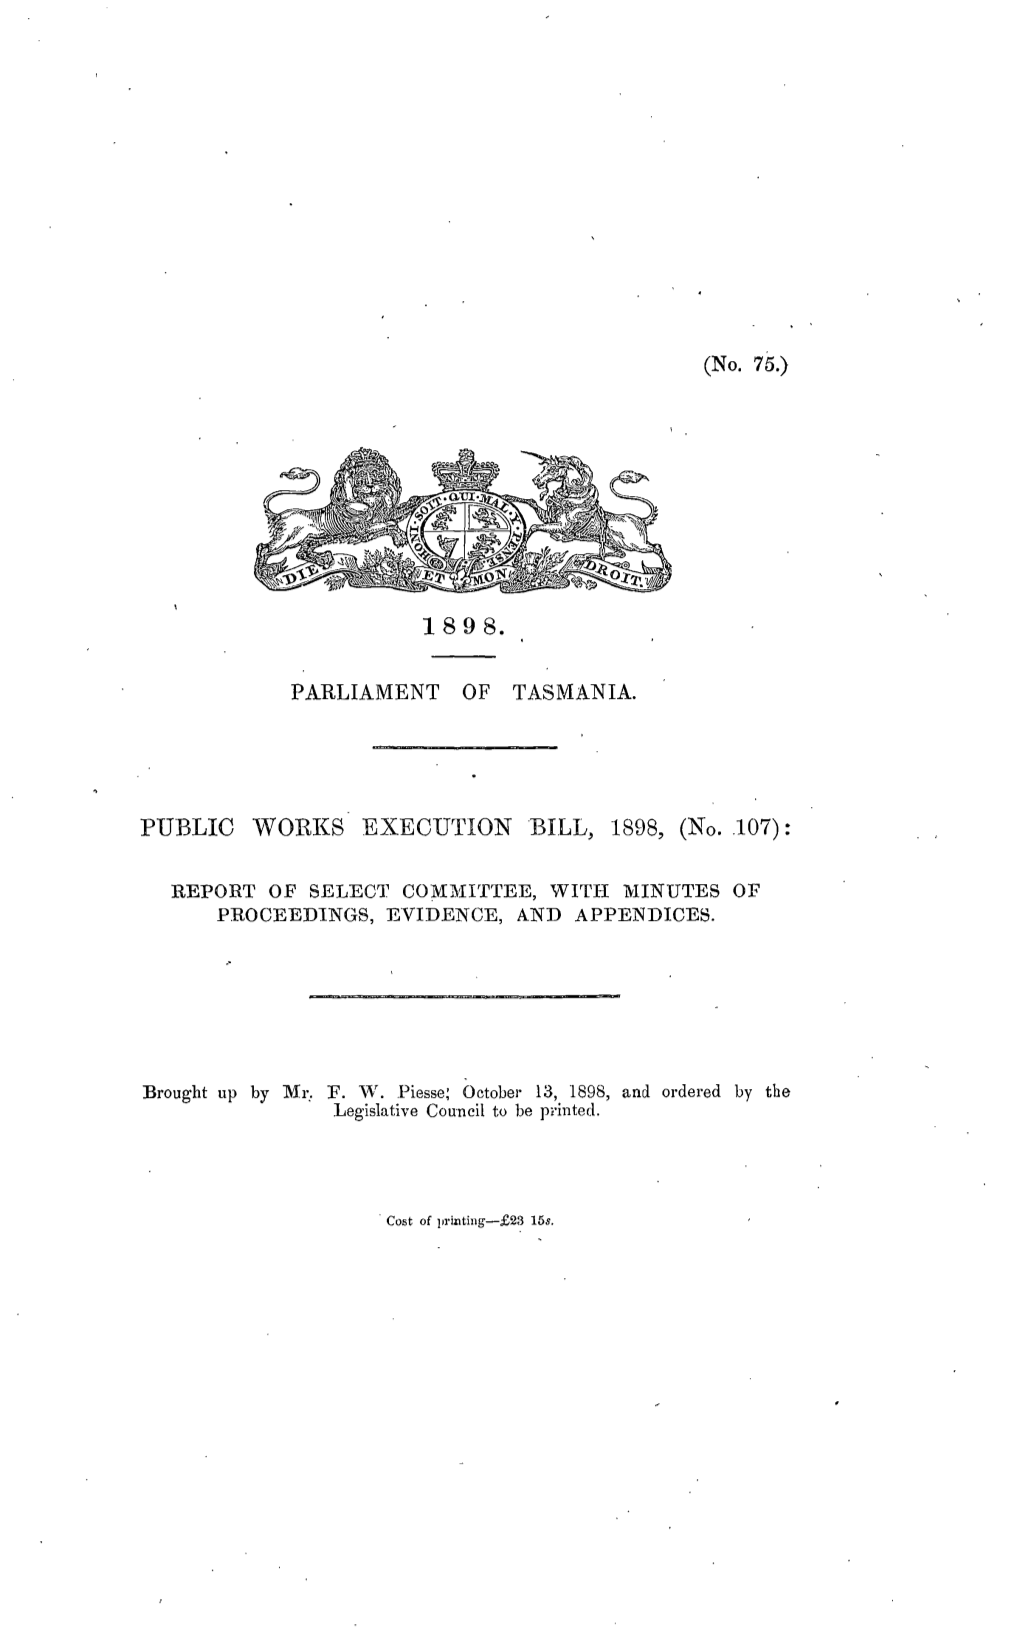 Public Works Execution Bill, 1898, (No. 107)